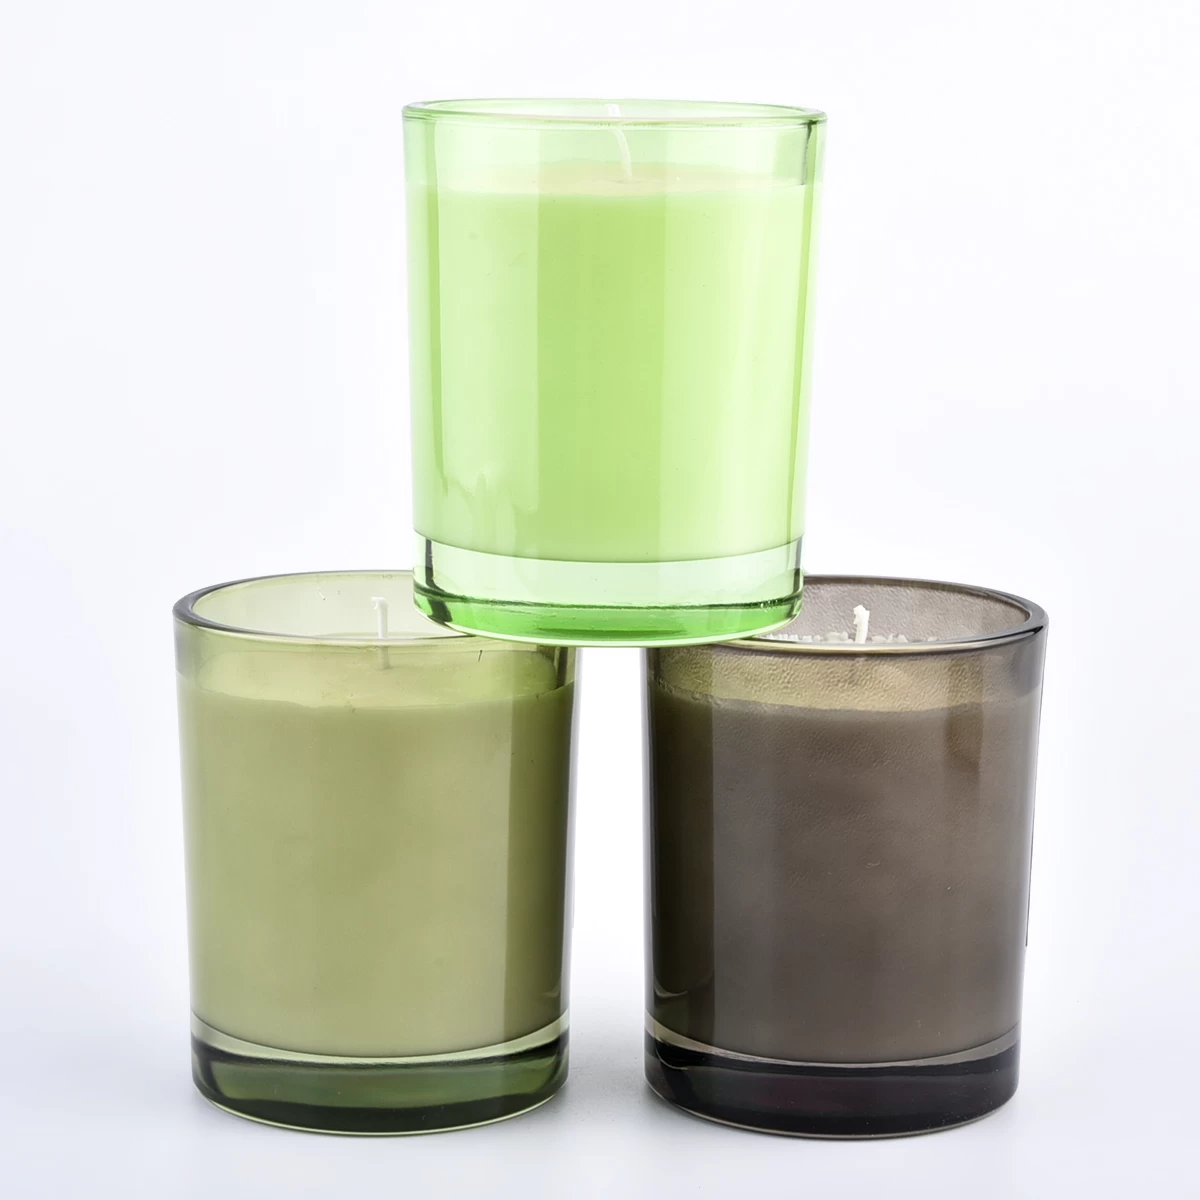 8oz popular glass candle vessels costom colors